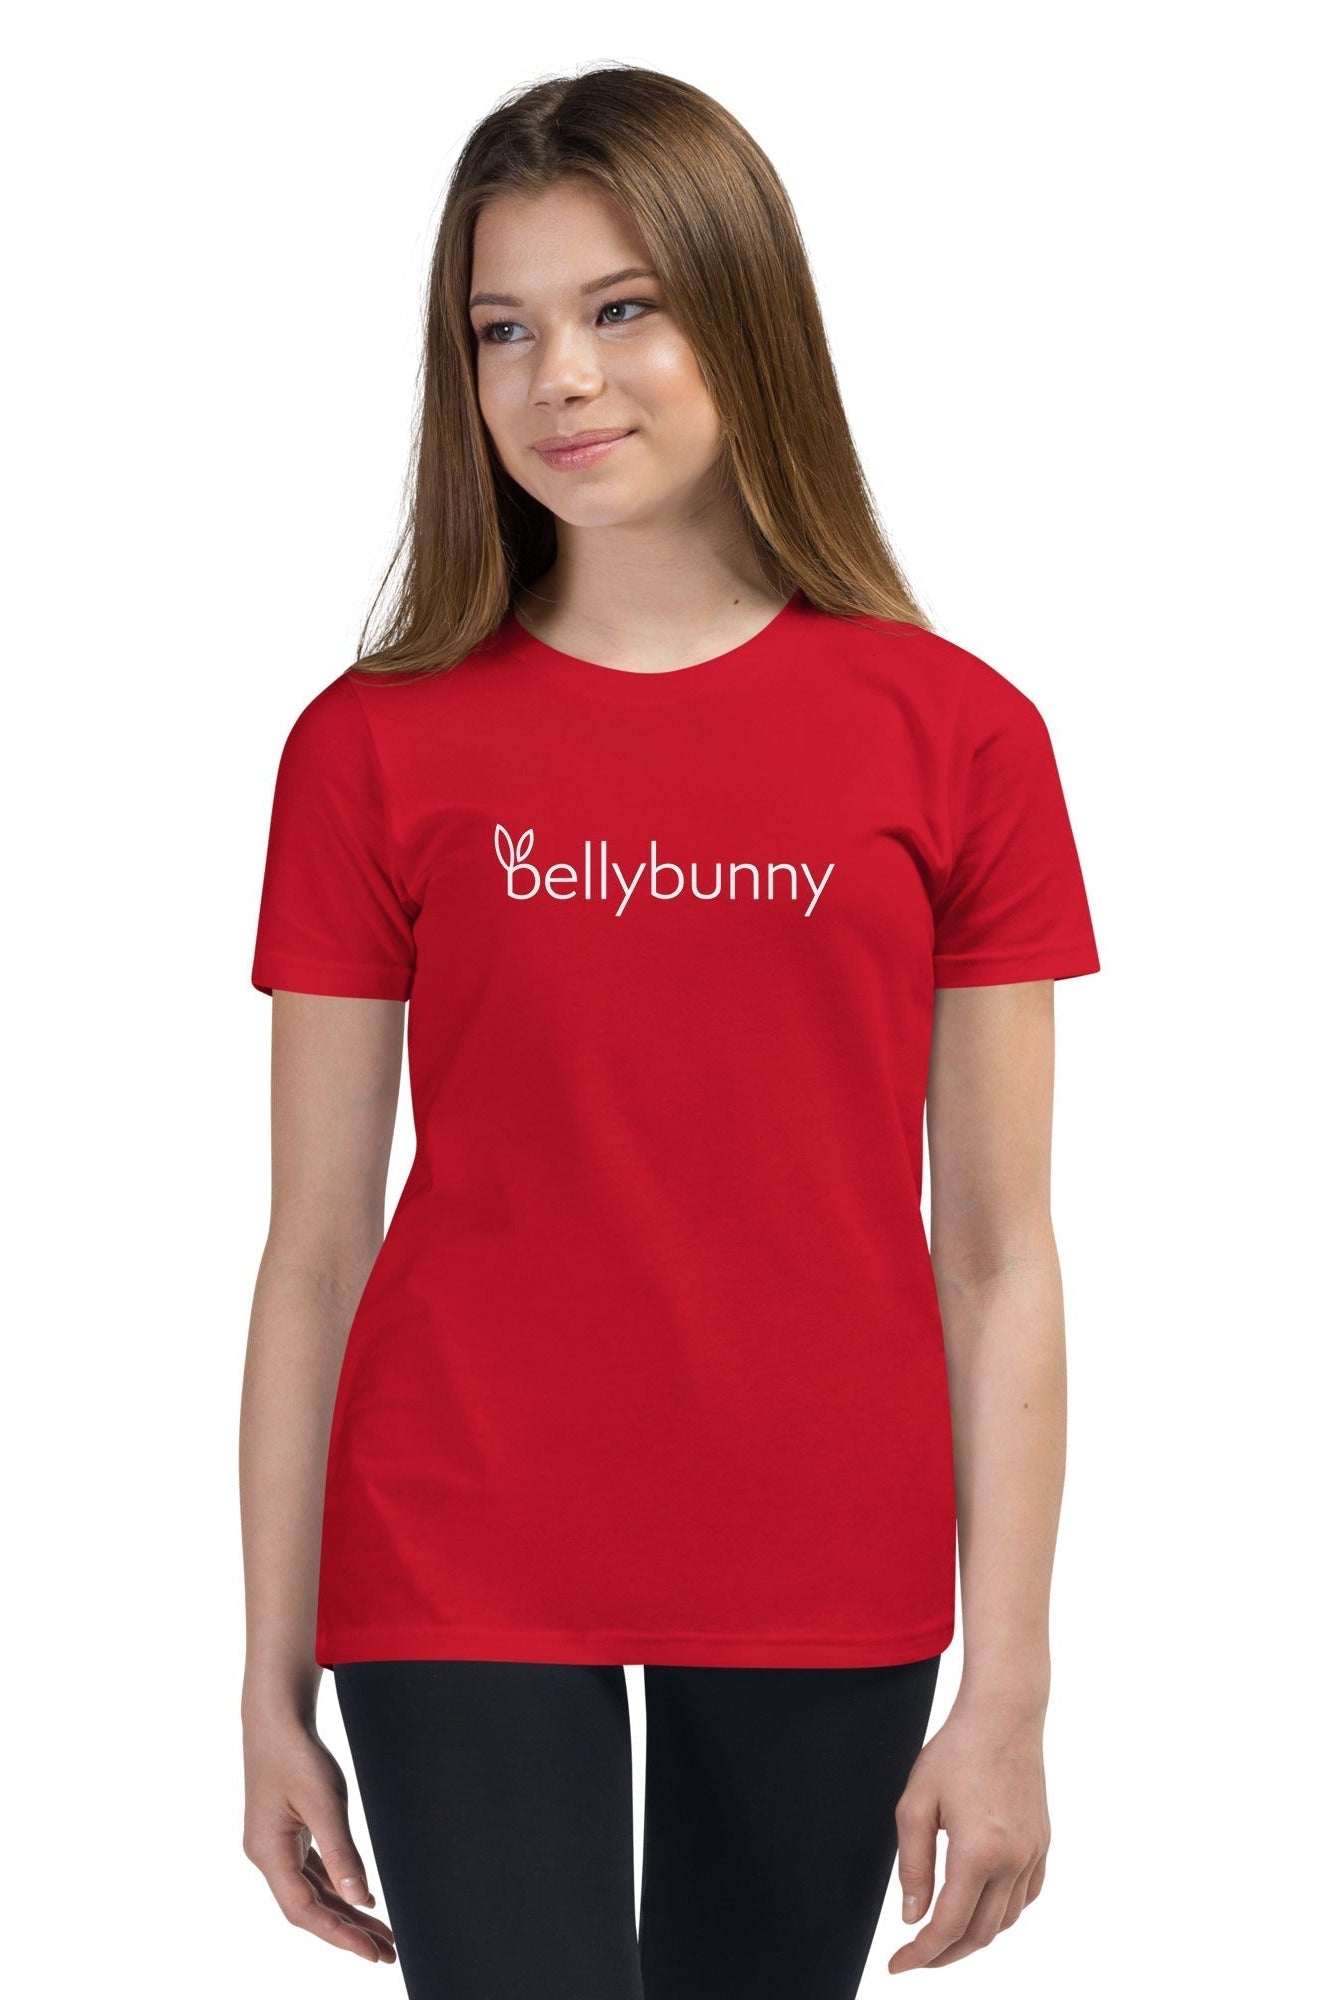 Bellybunny-Youth Short Sleeve T-Shirt-